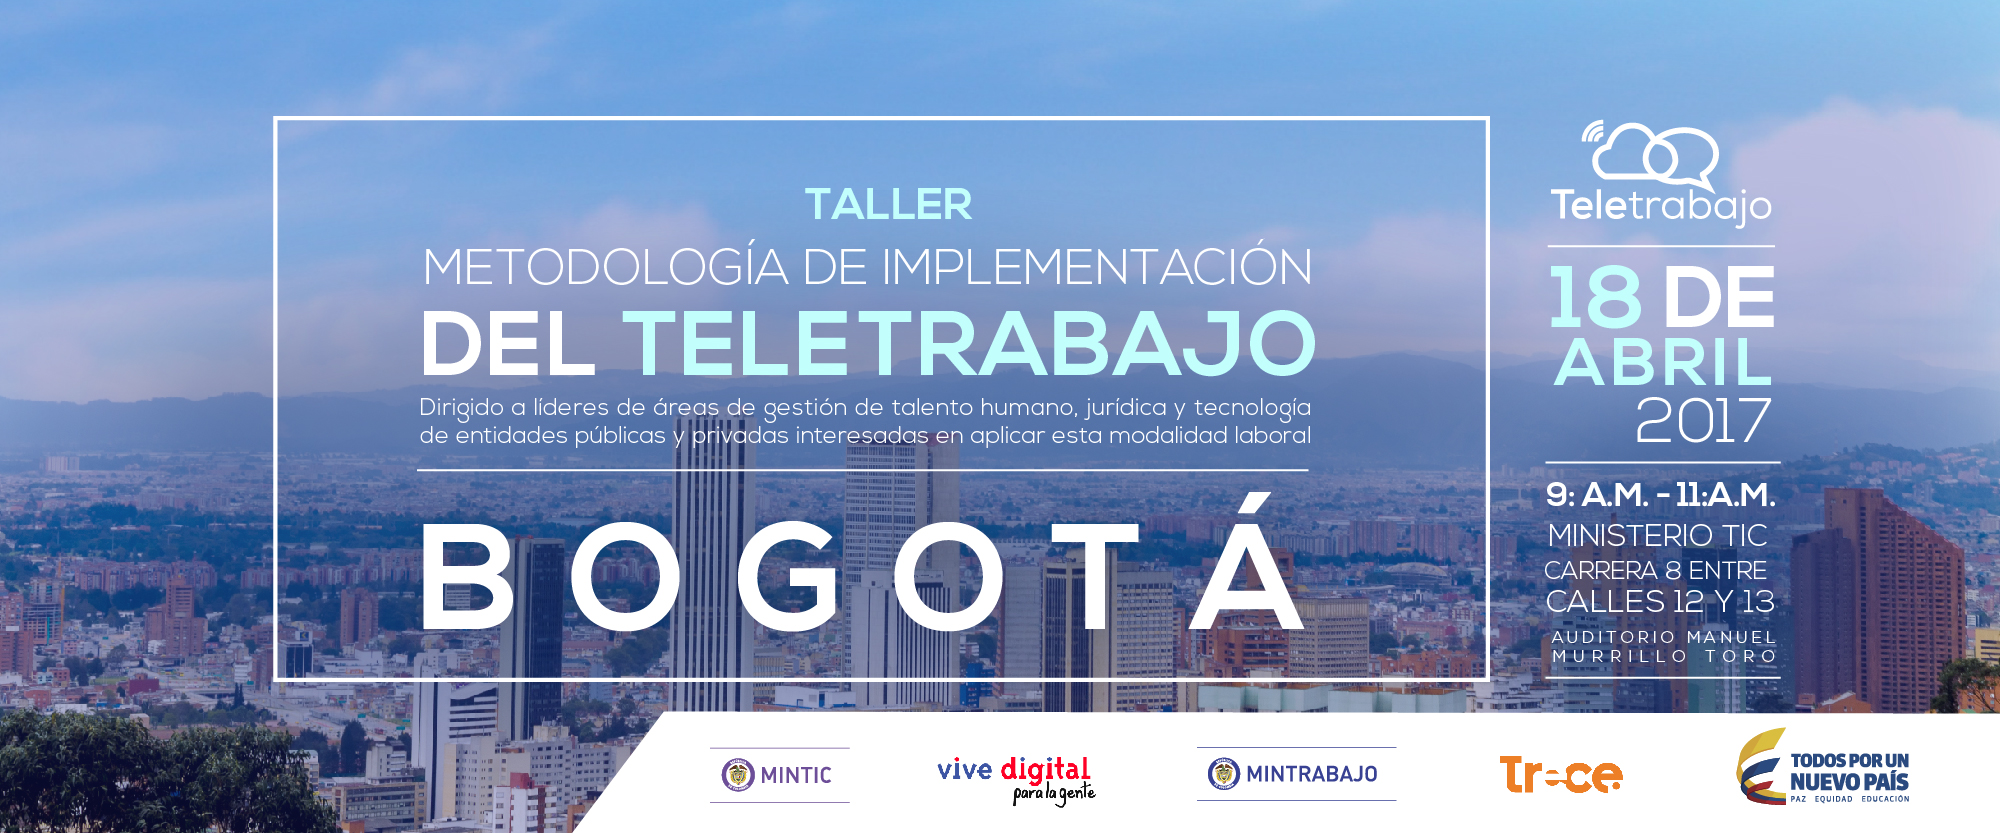  En Bogotá, taller gratuito de Teletrabajo